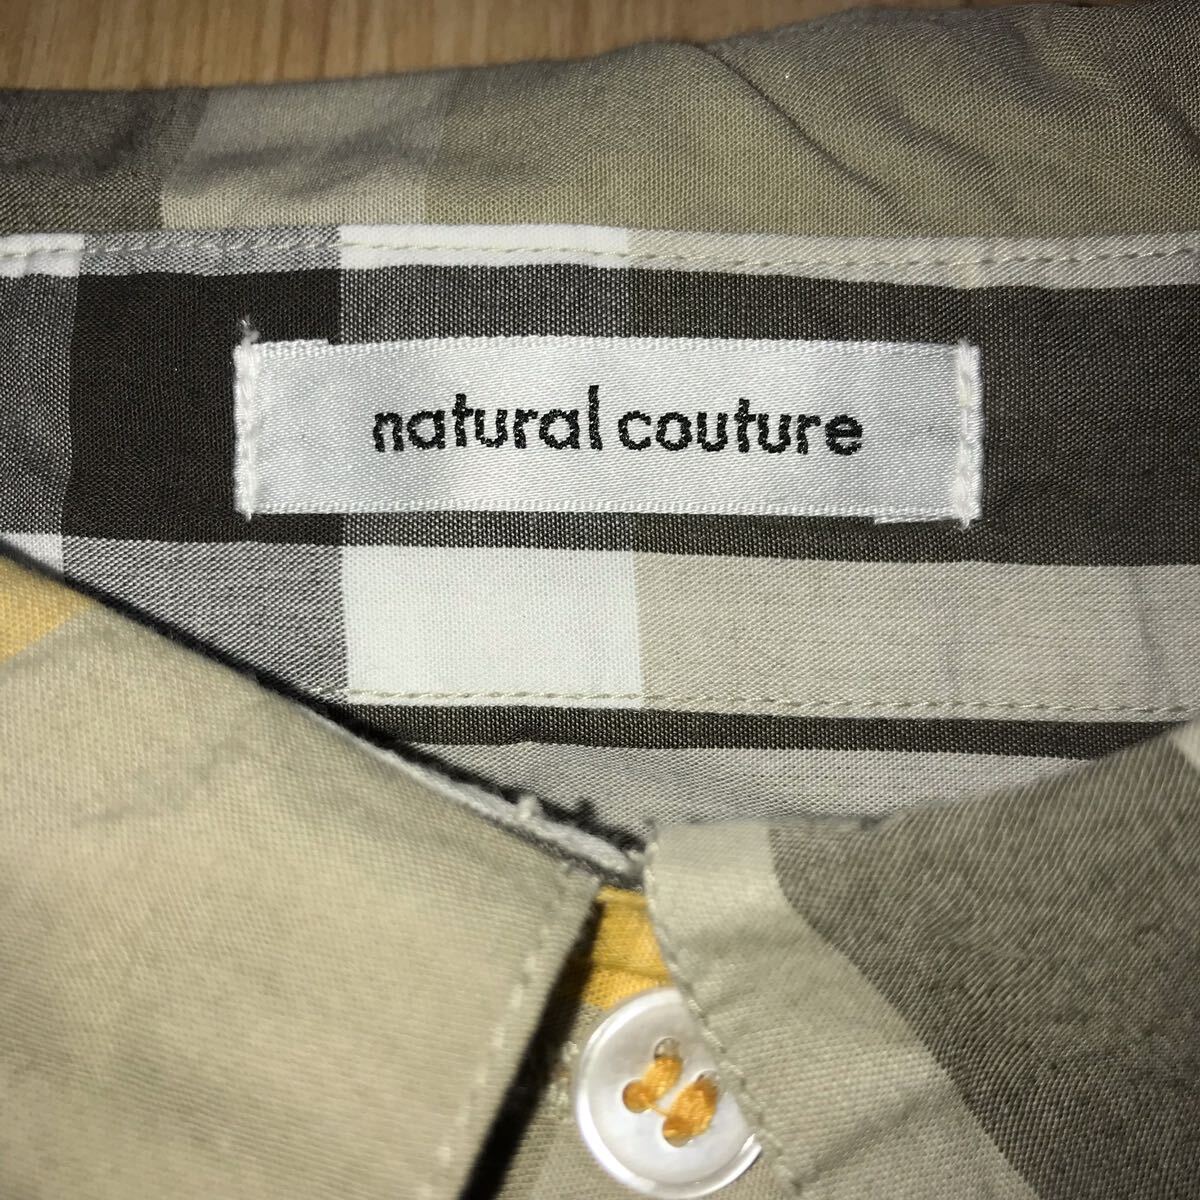  tag attaching natural kchu-ru casual shirt 017-1-323 lady's F beige yellow white gray check 